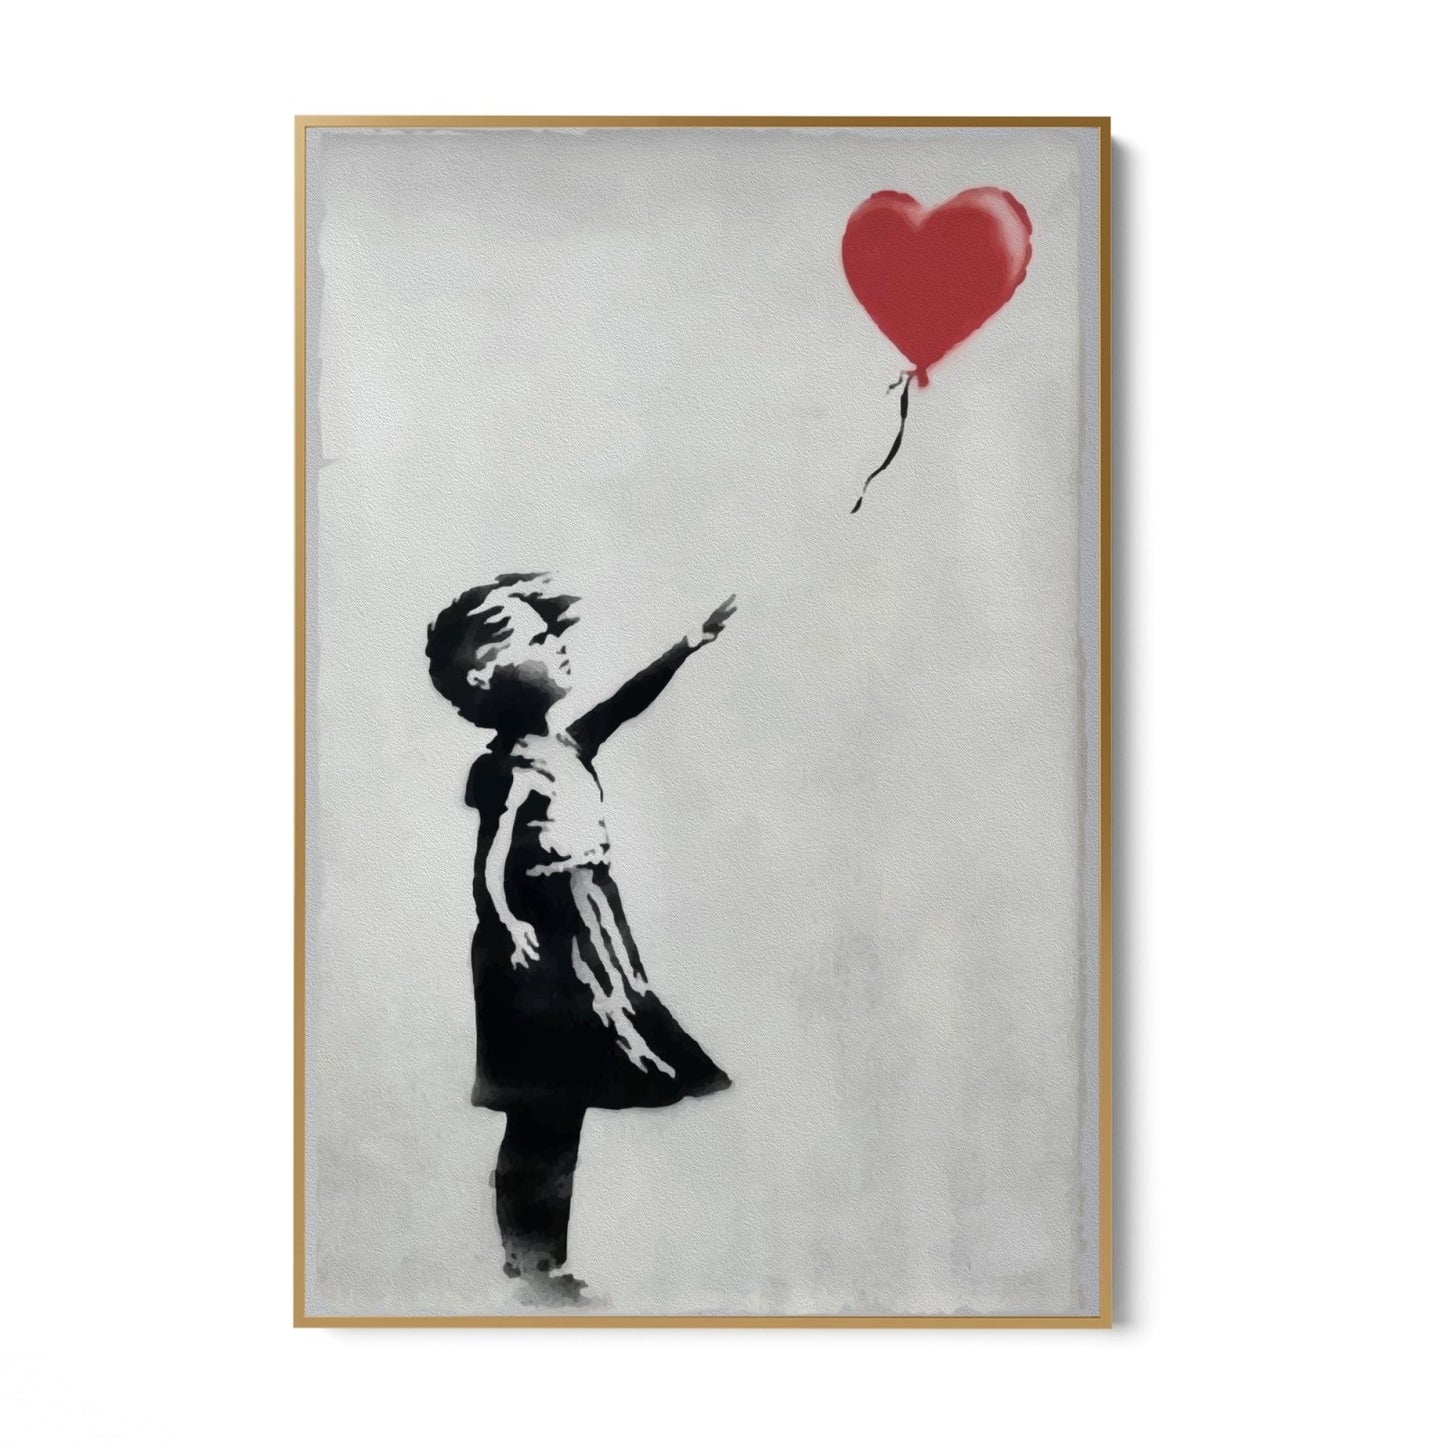 Ballonmädchen, Banksy